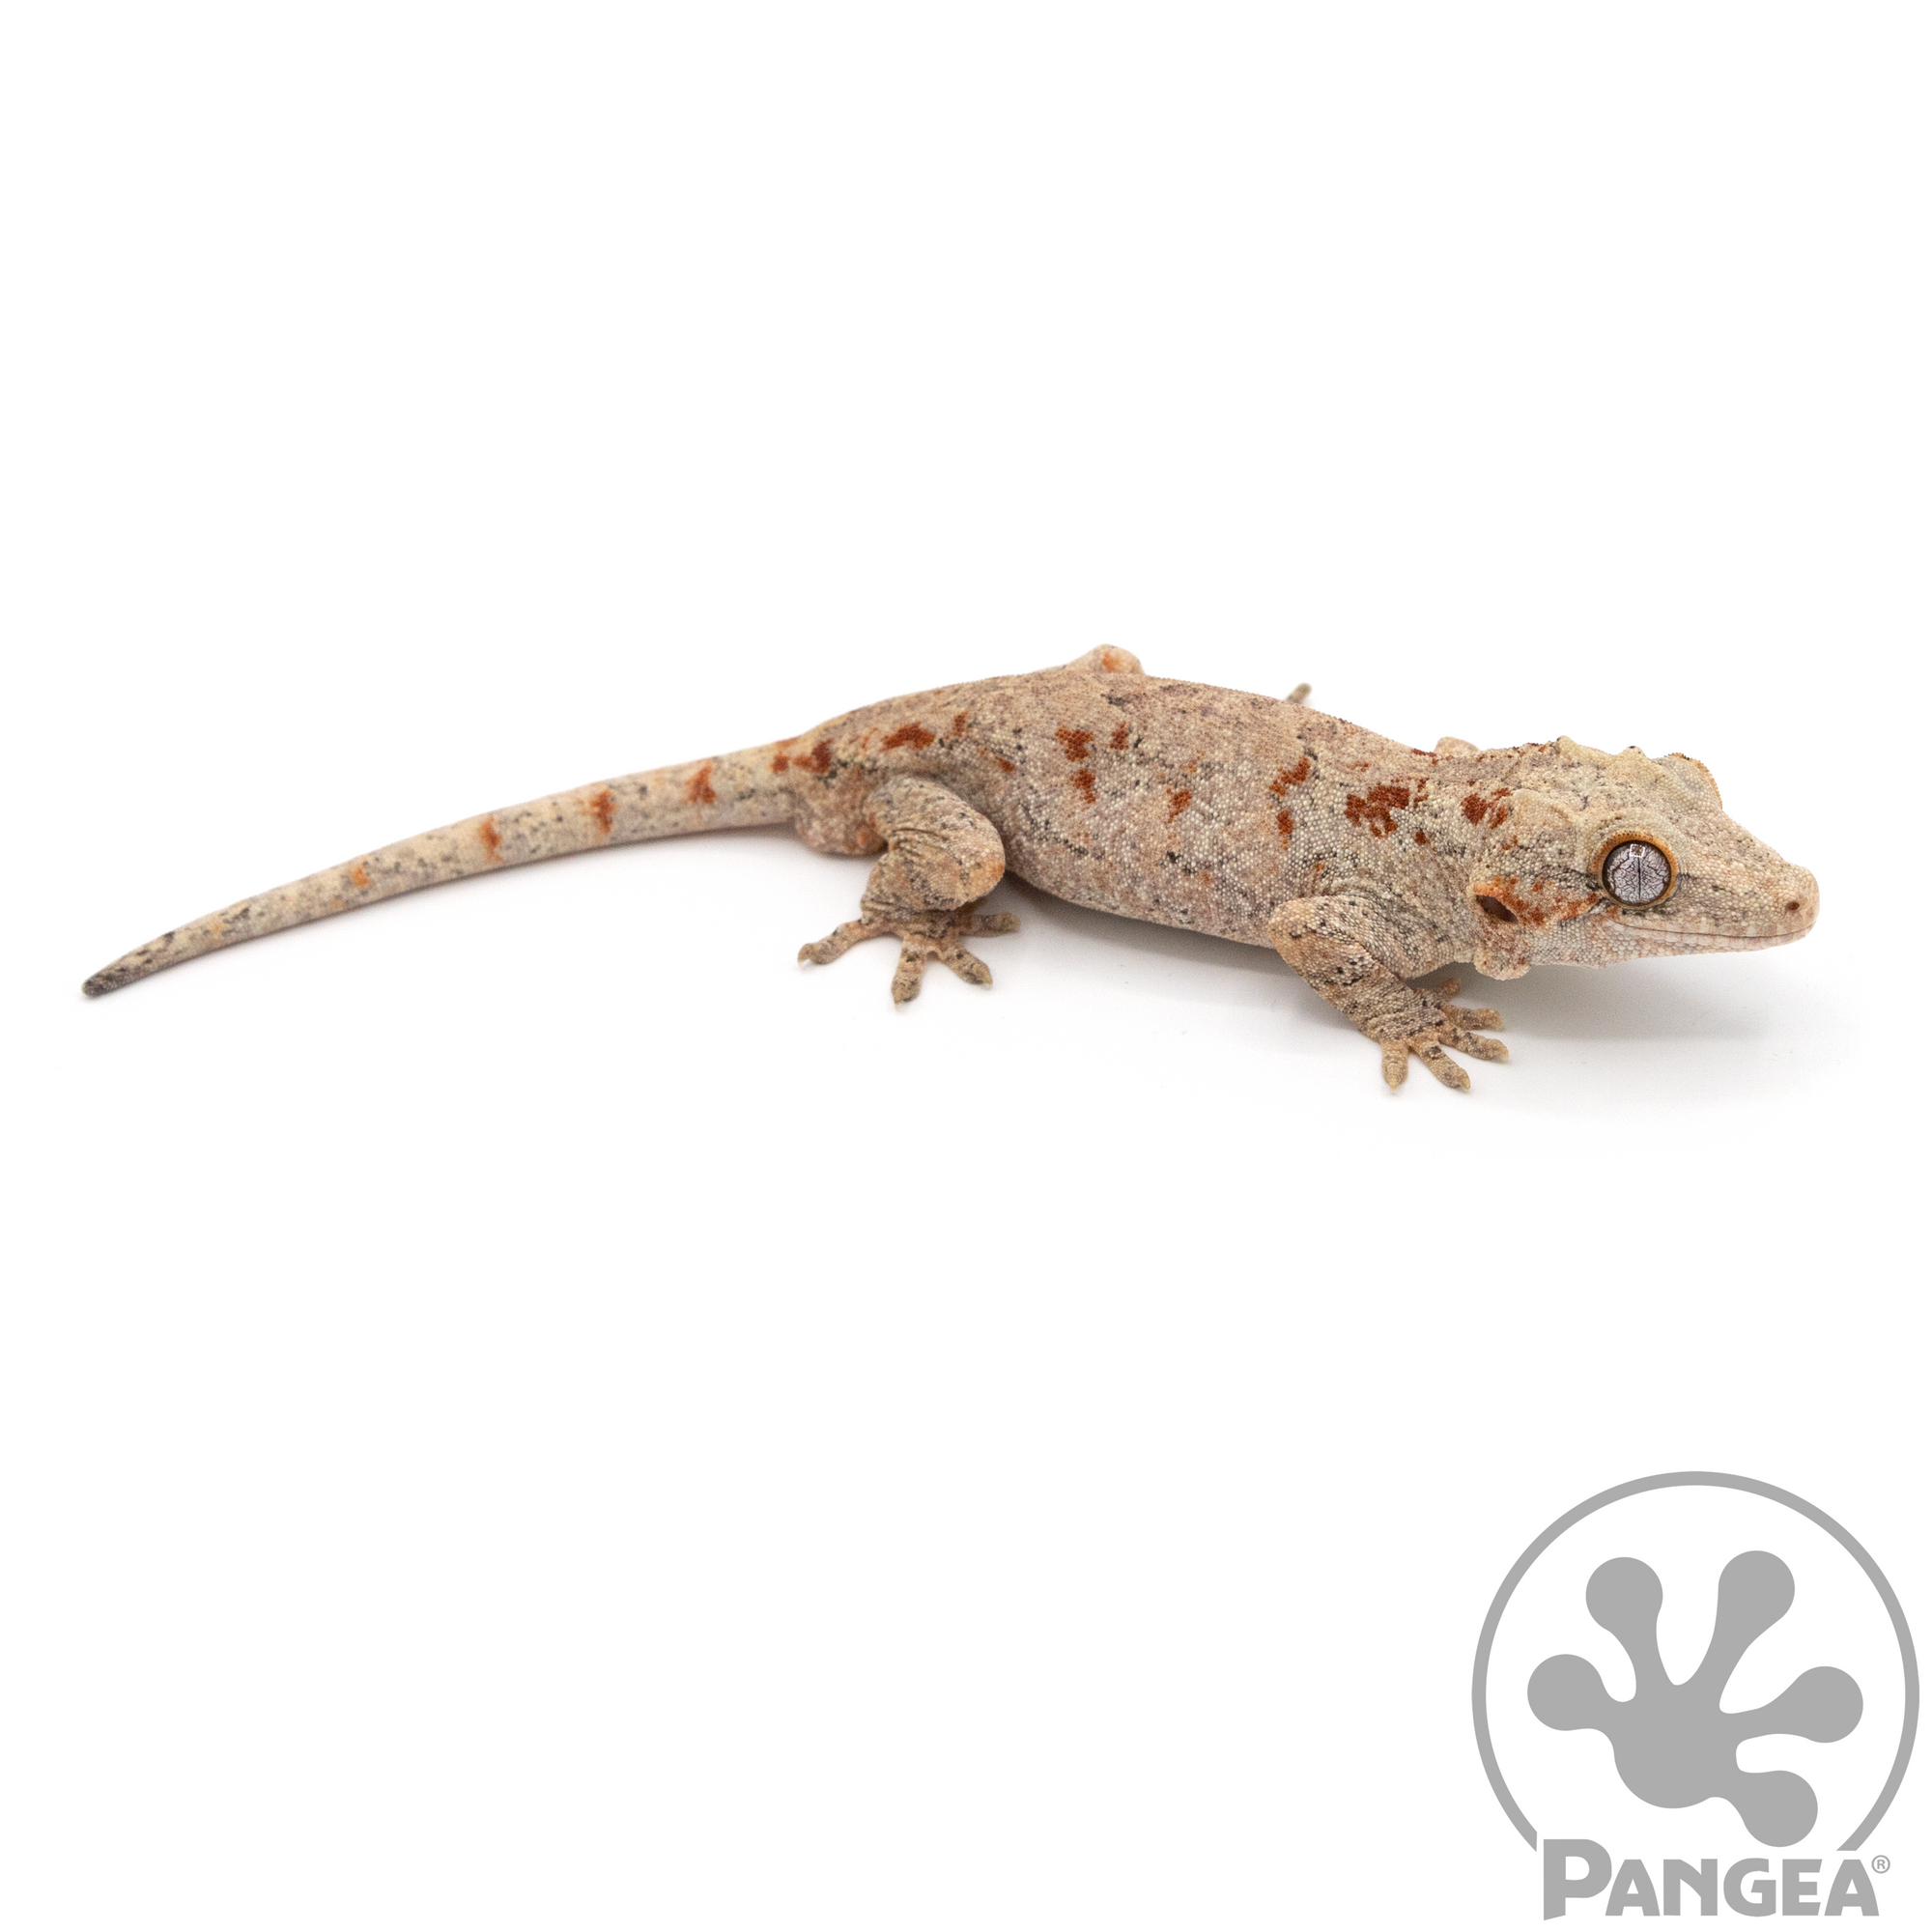 Male Orange Blotch Gargoyle Gecko Ga-0075 looking right